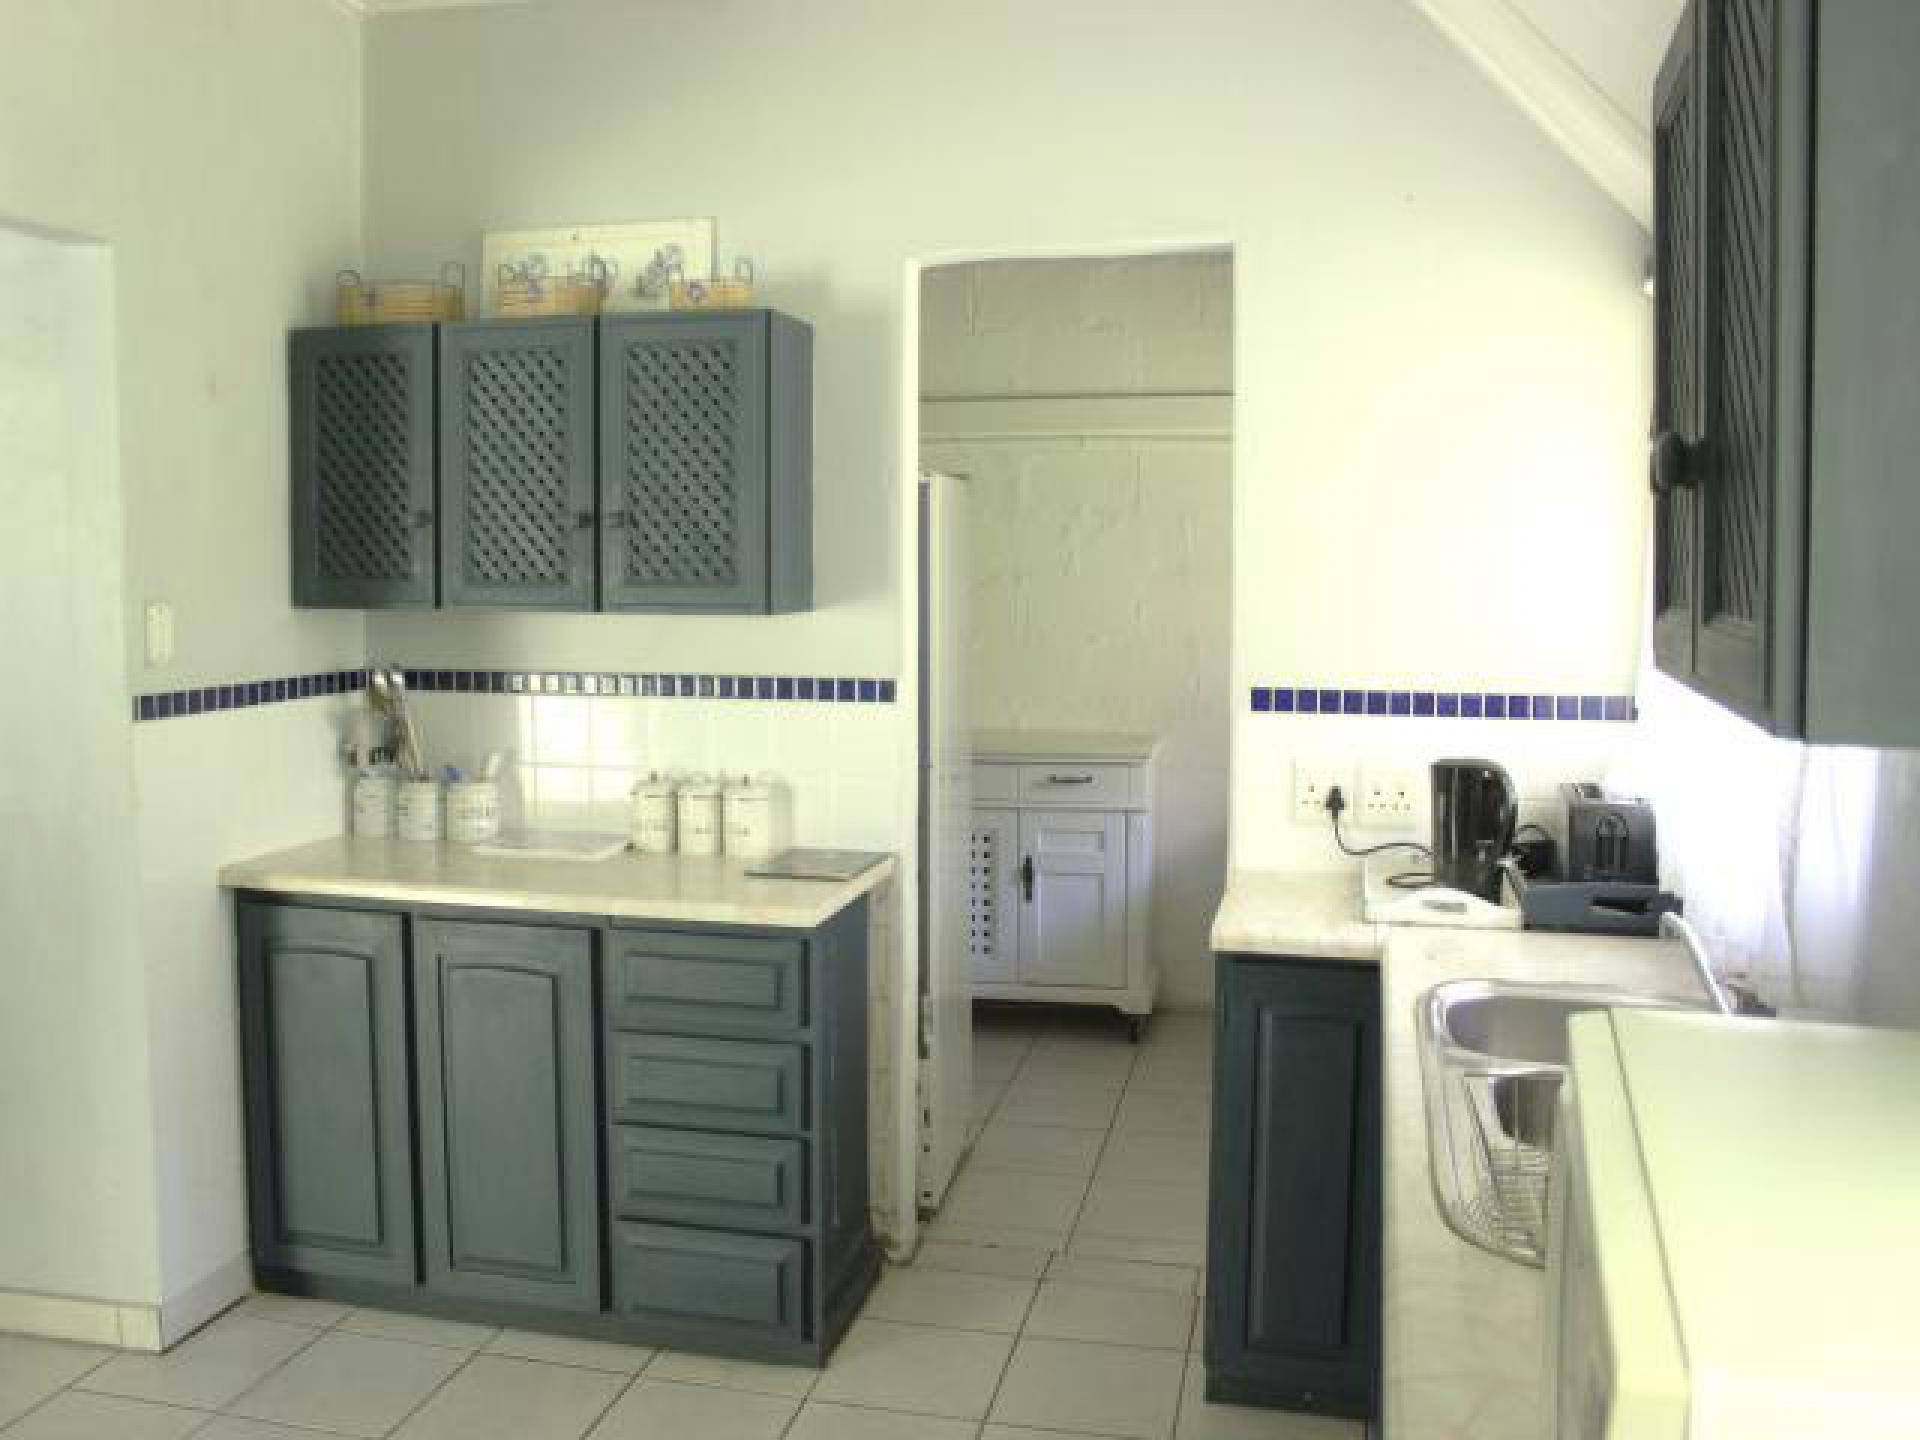 Kitchen of property in Port Edward